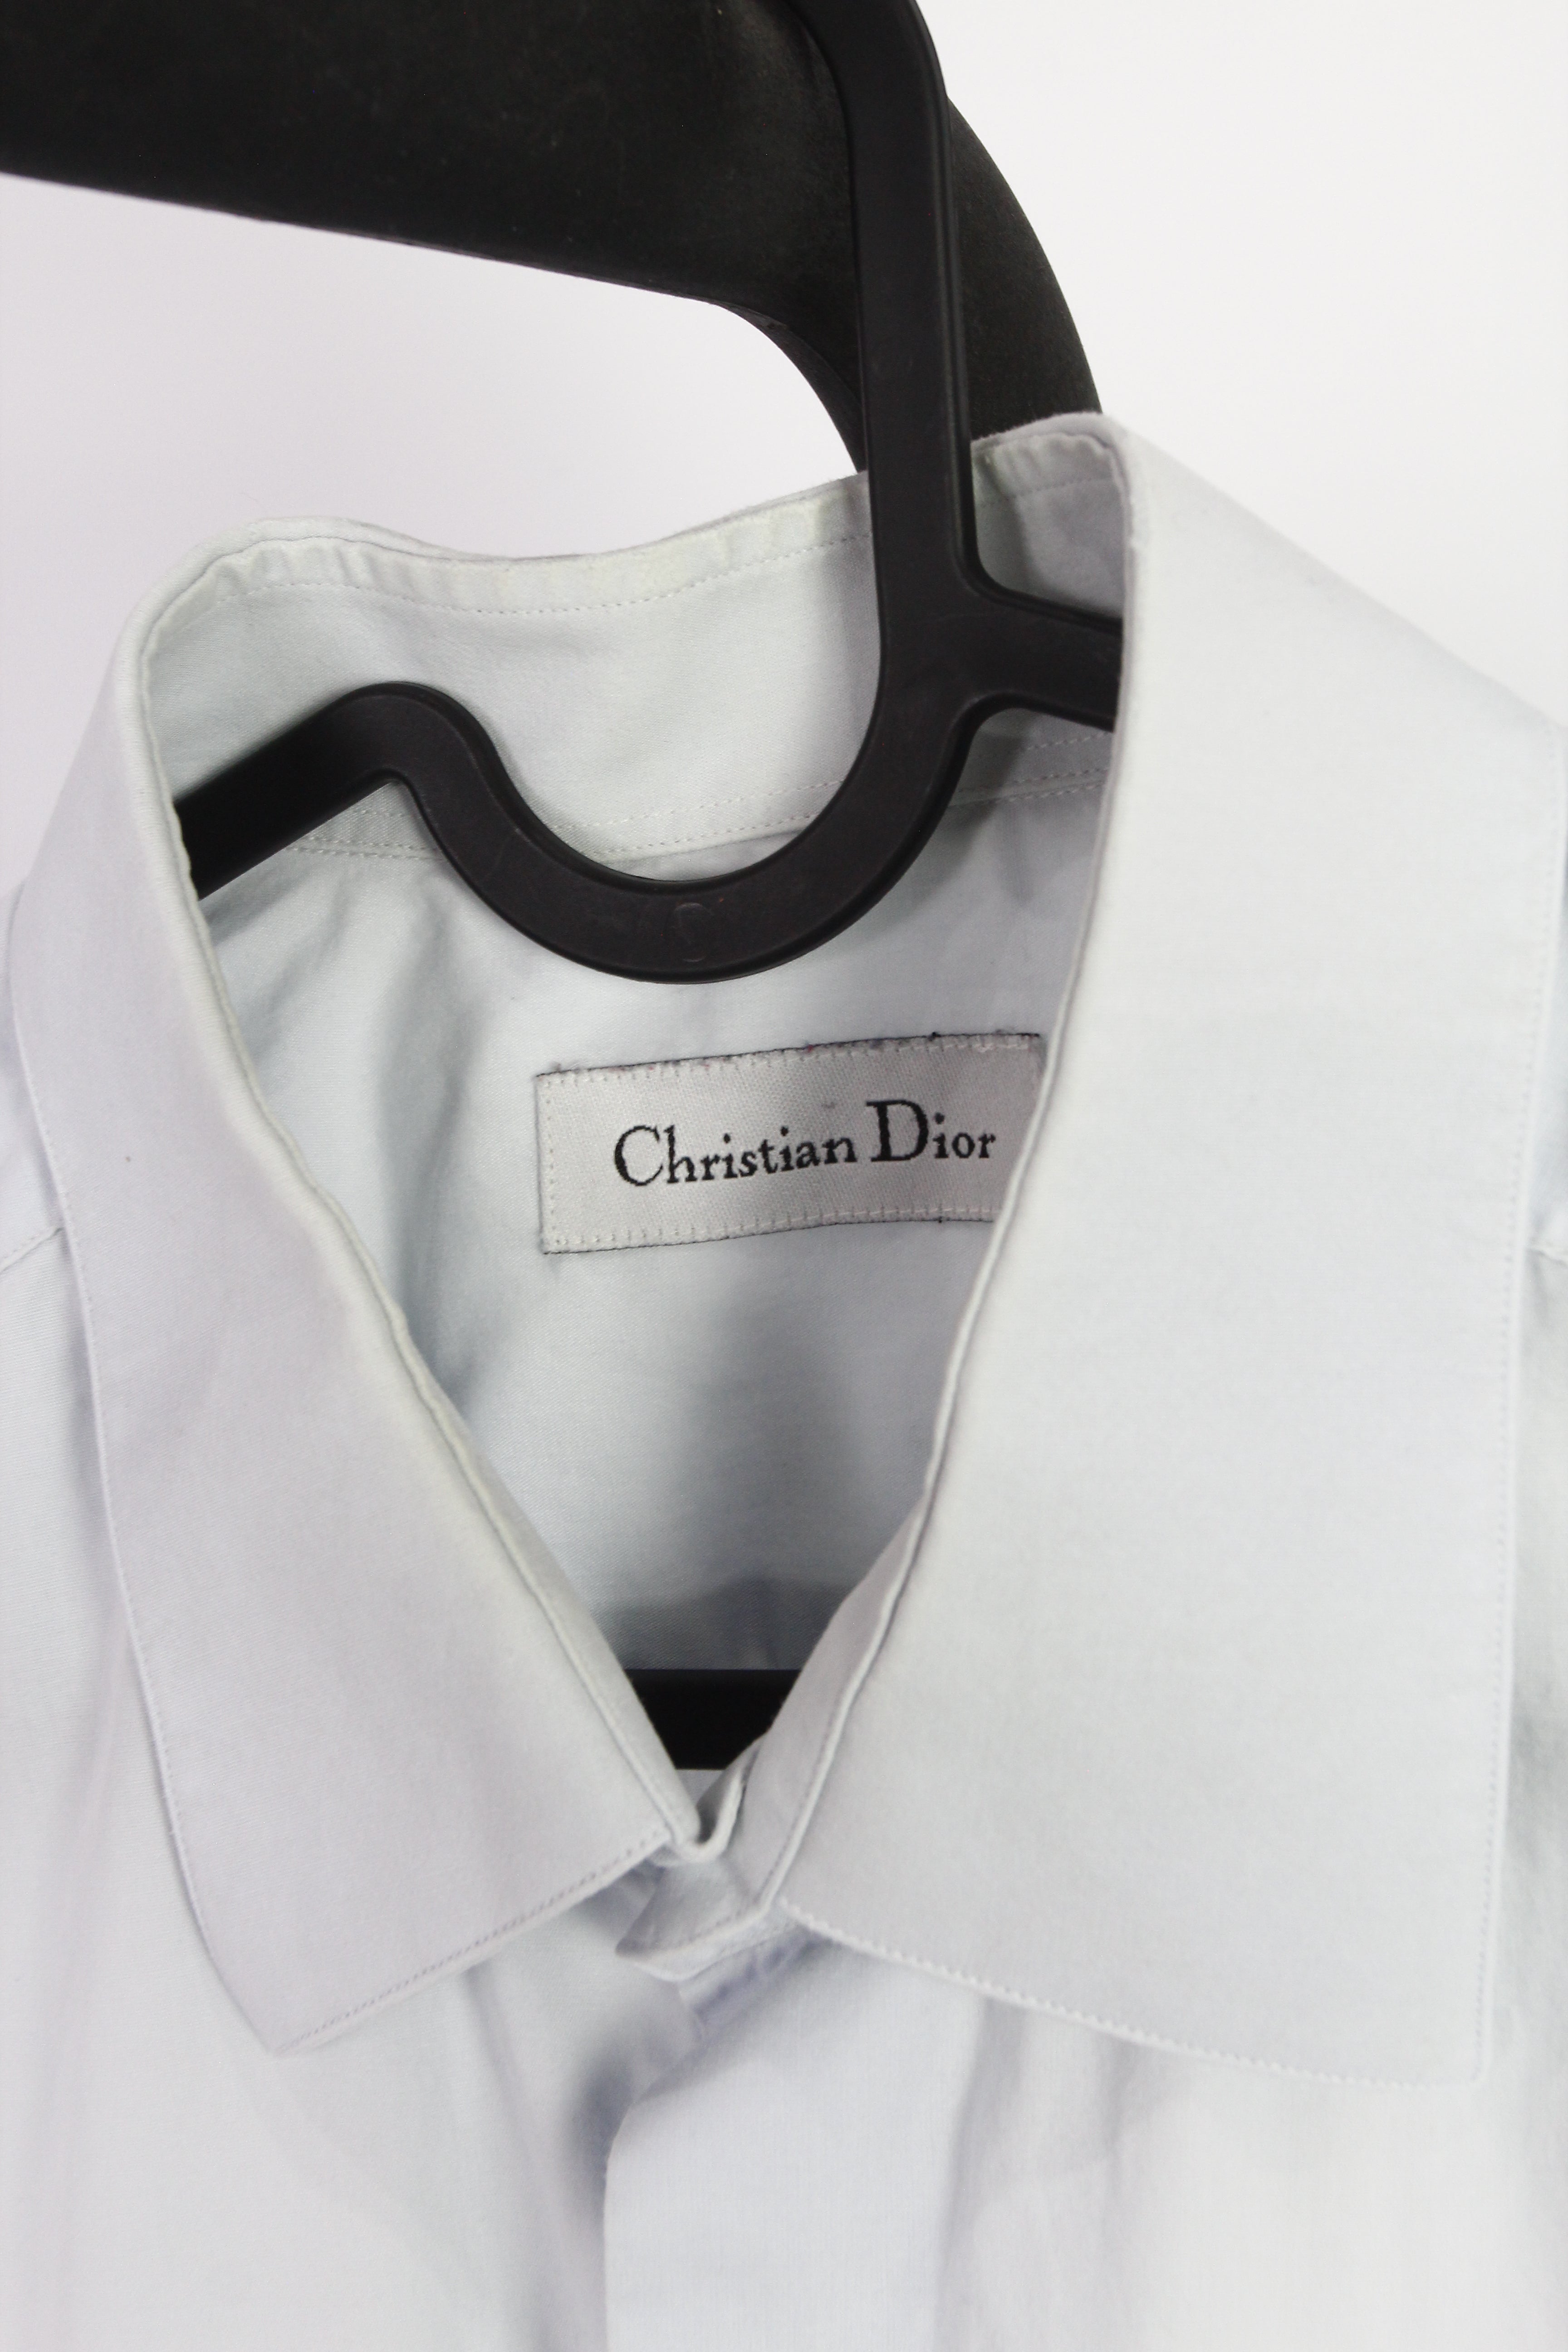 Camisa Christian Dior - L